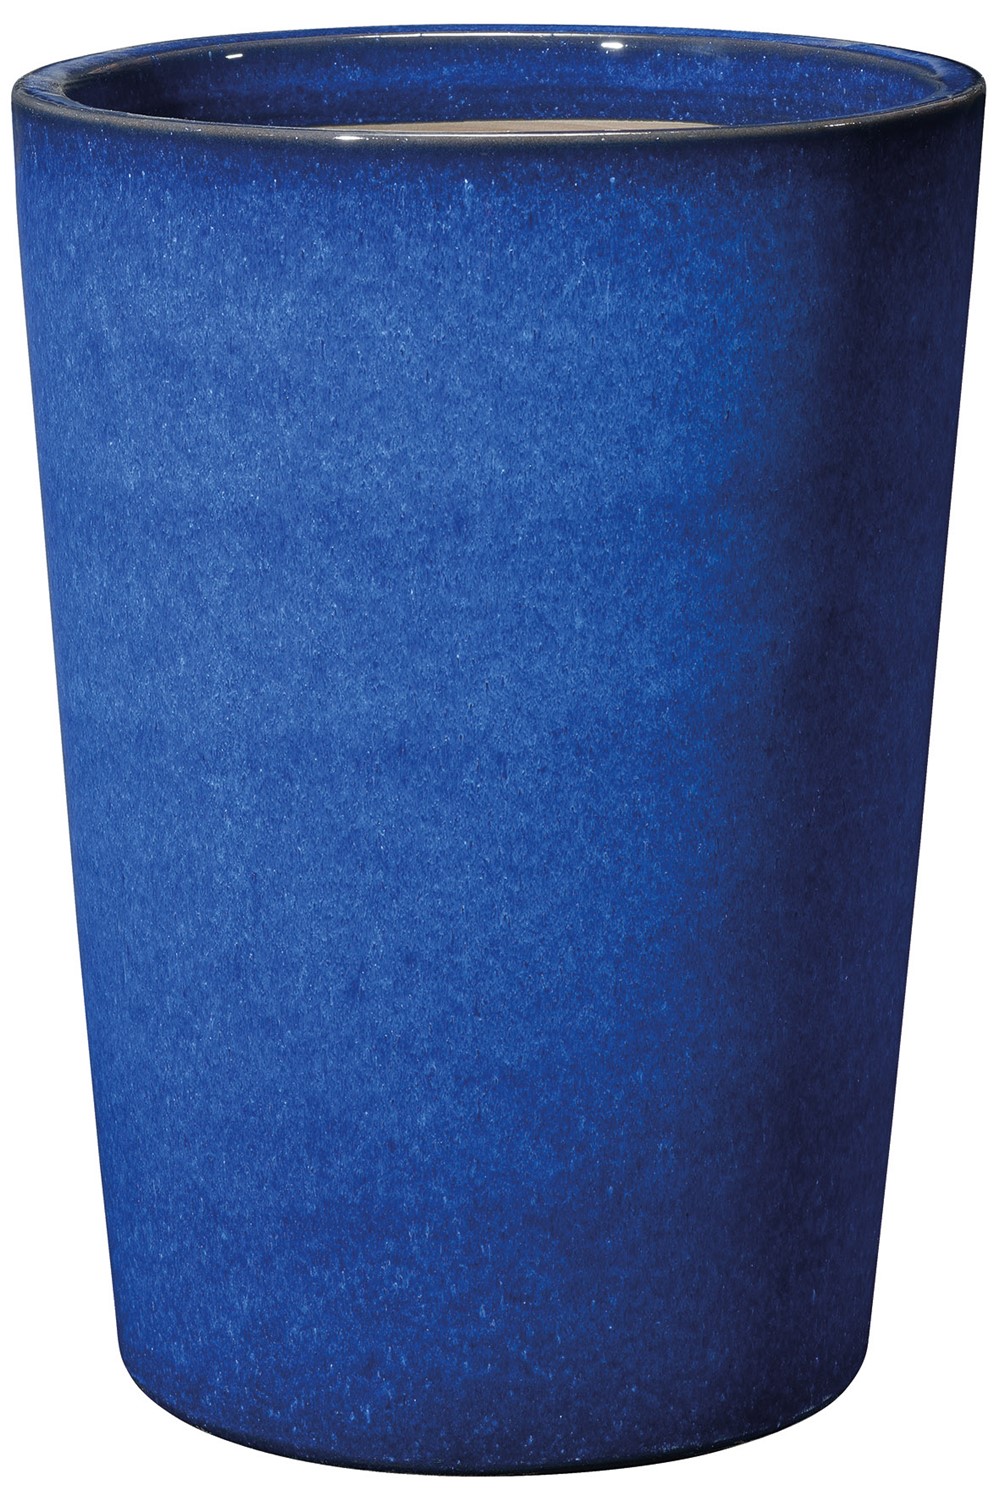 Pot outdoor flamenco deroma, bleu en terre cuite d39xh46cm - DEROMA